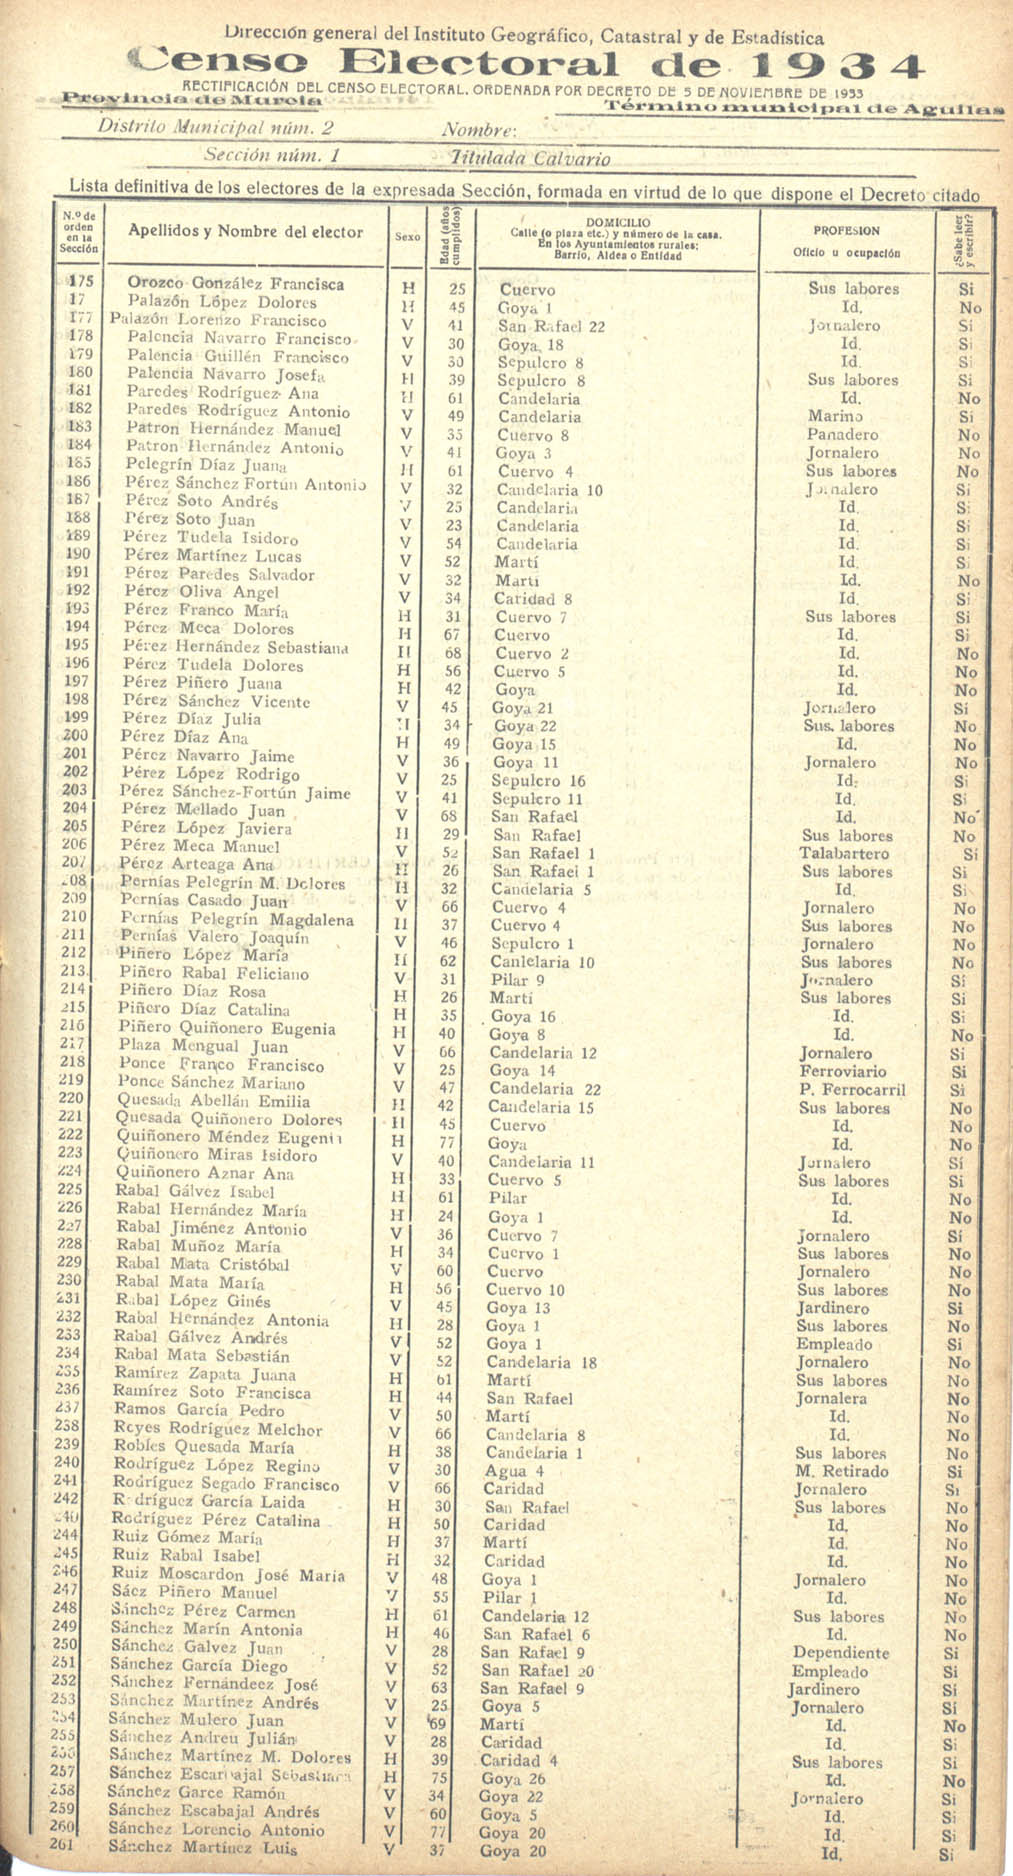 Censo electoral provincial de 1934. Volumen I: De Abanilla a Lorca